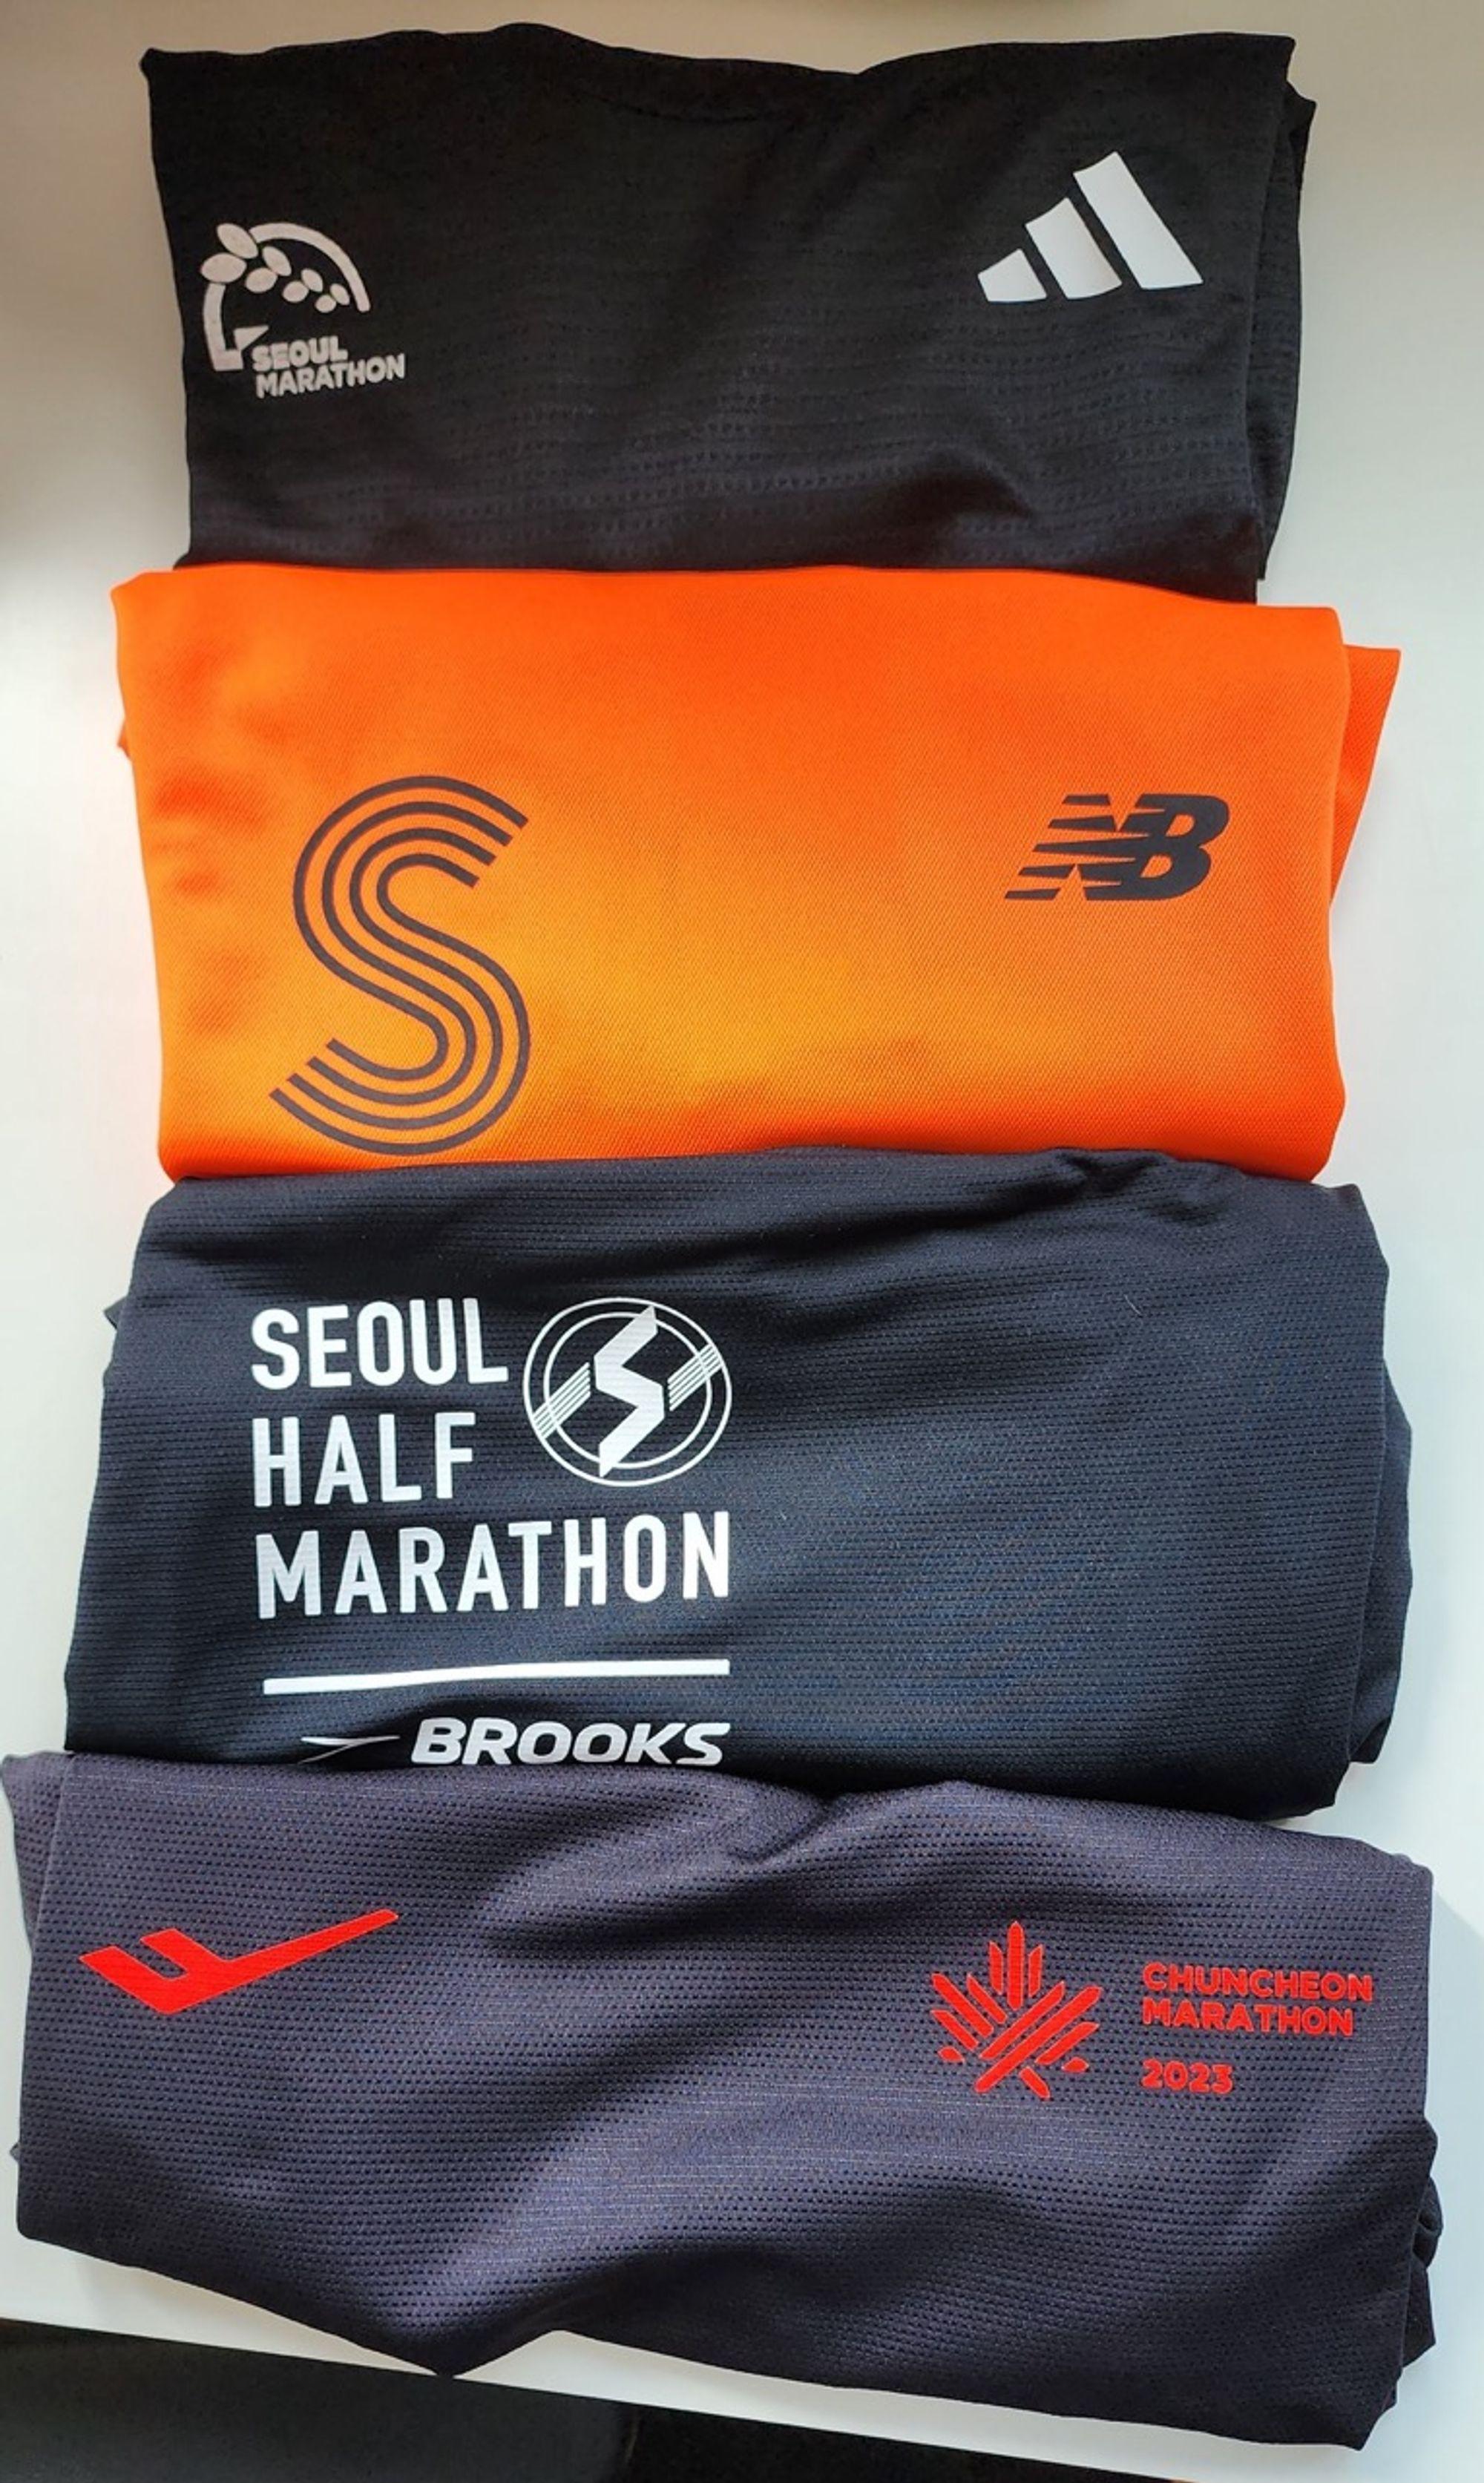 Seoul Maratahon, JTBC Seoul Marathon, Seoul Half Marathon, Chuncheon Marathon